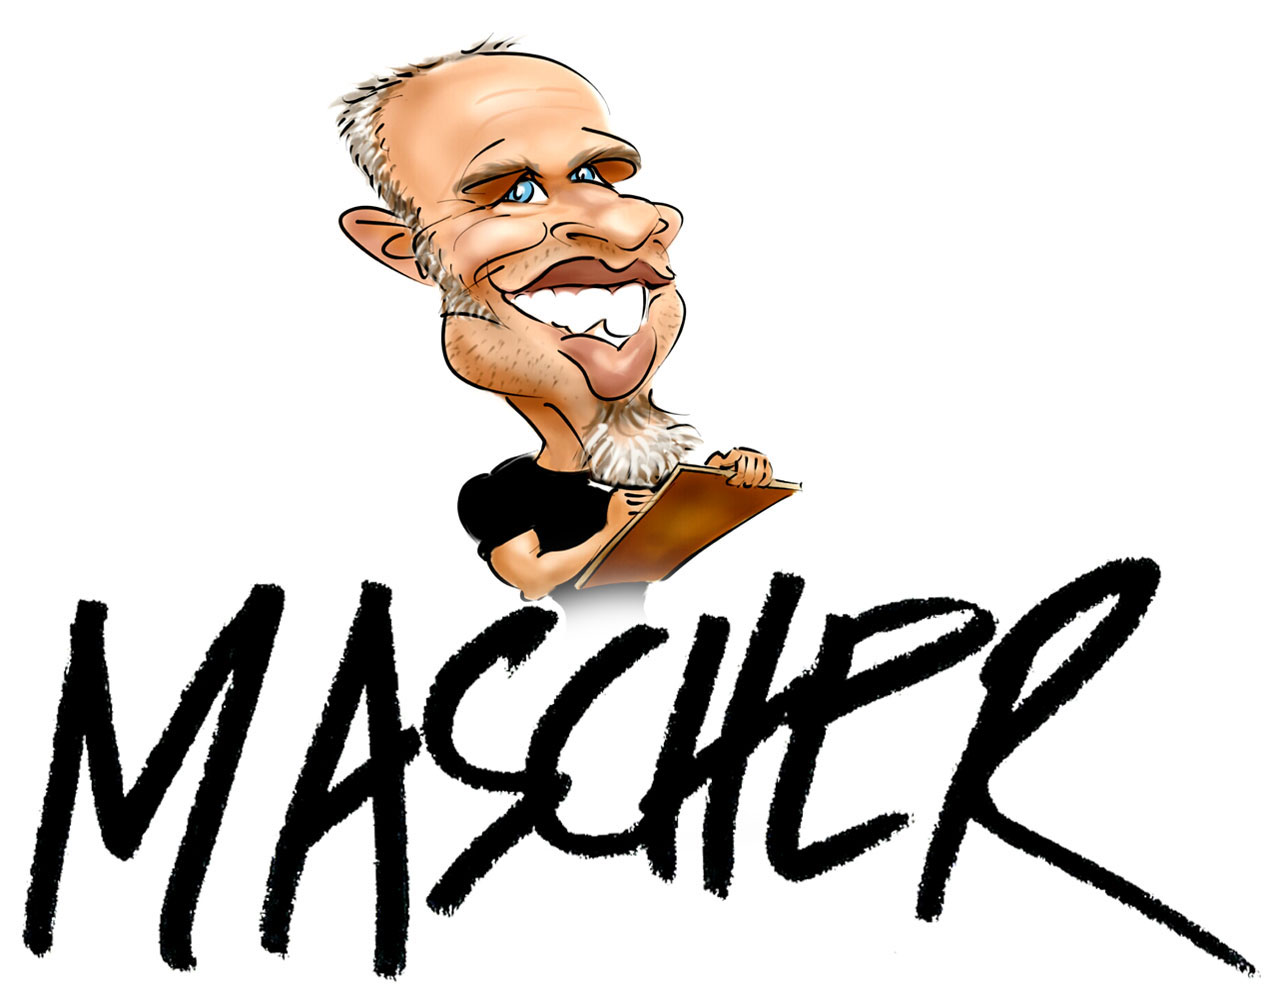 Peter Mascher - Caricatures - Cartoons - Illustrations